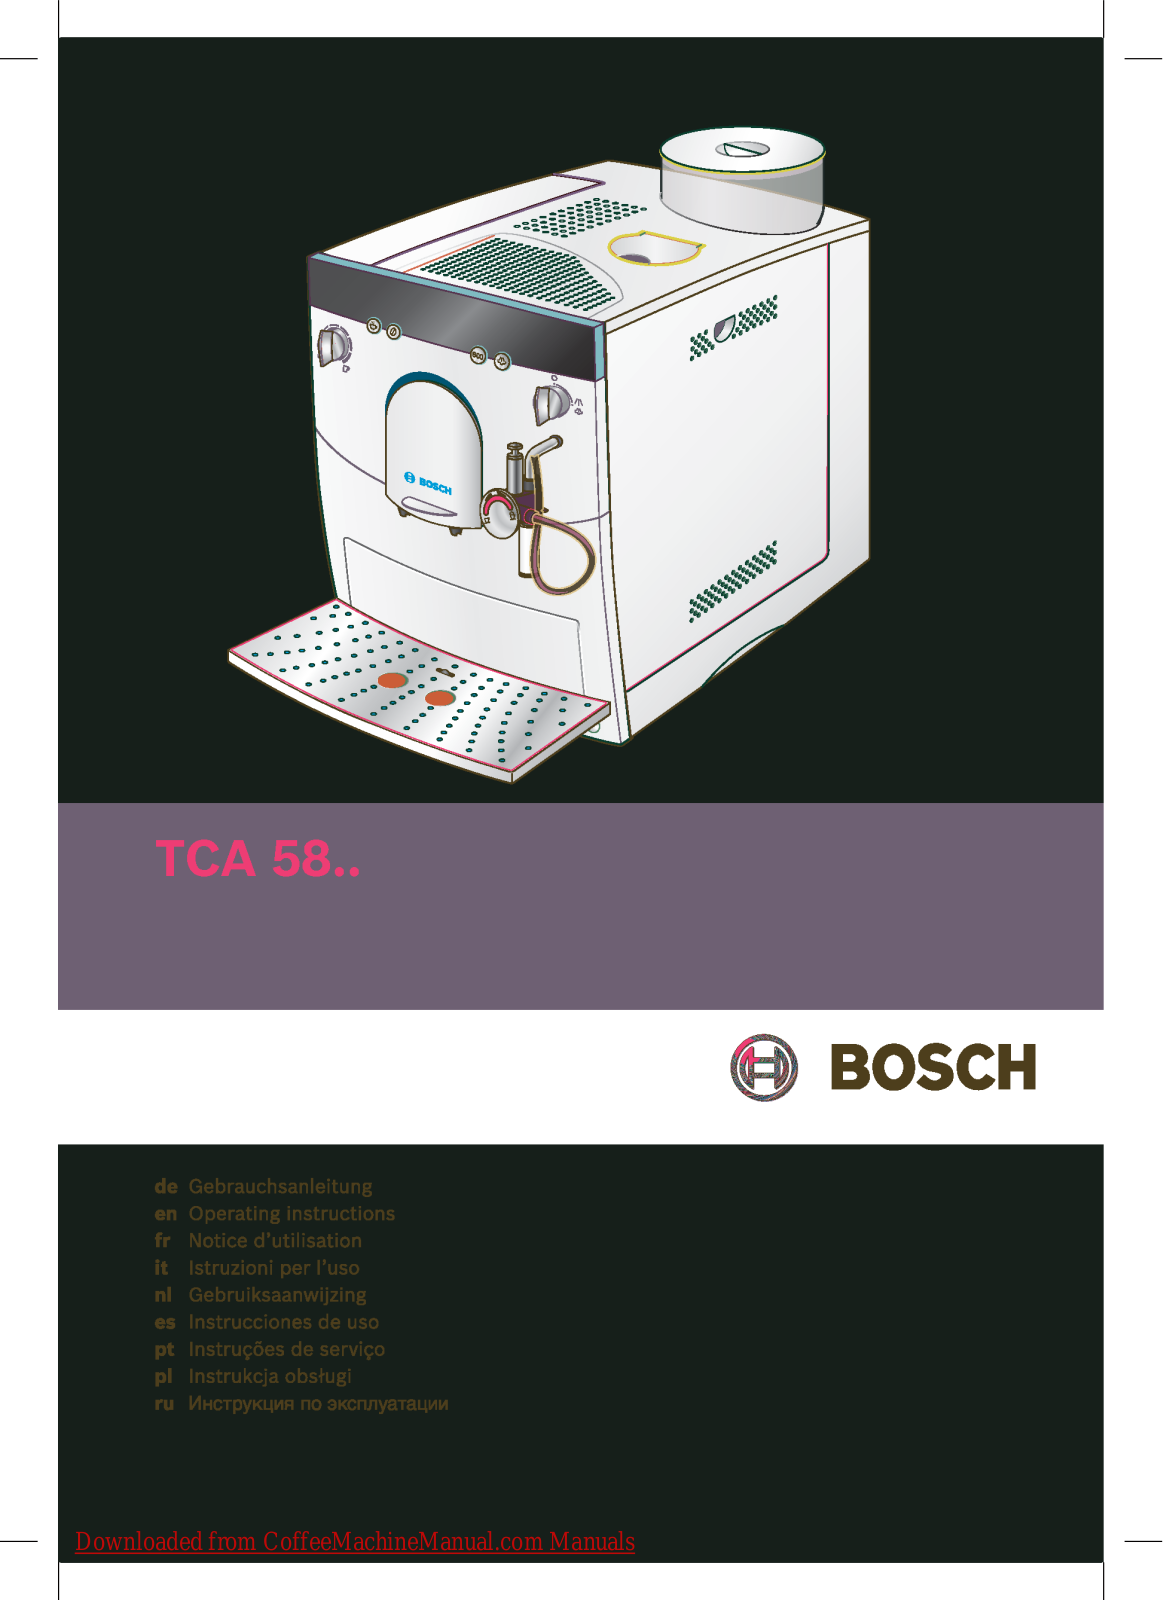 Bosch TCA 58 Operating Instructions Manual